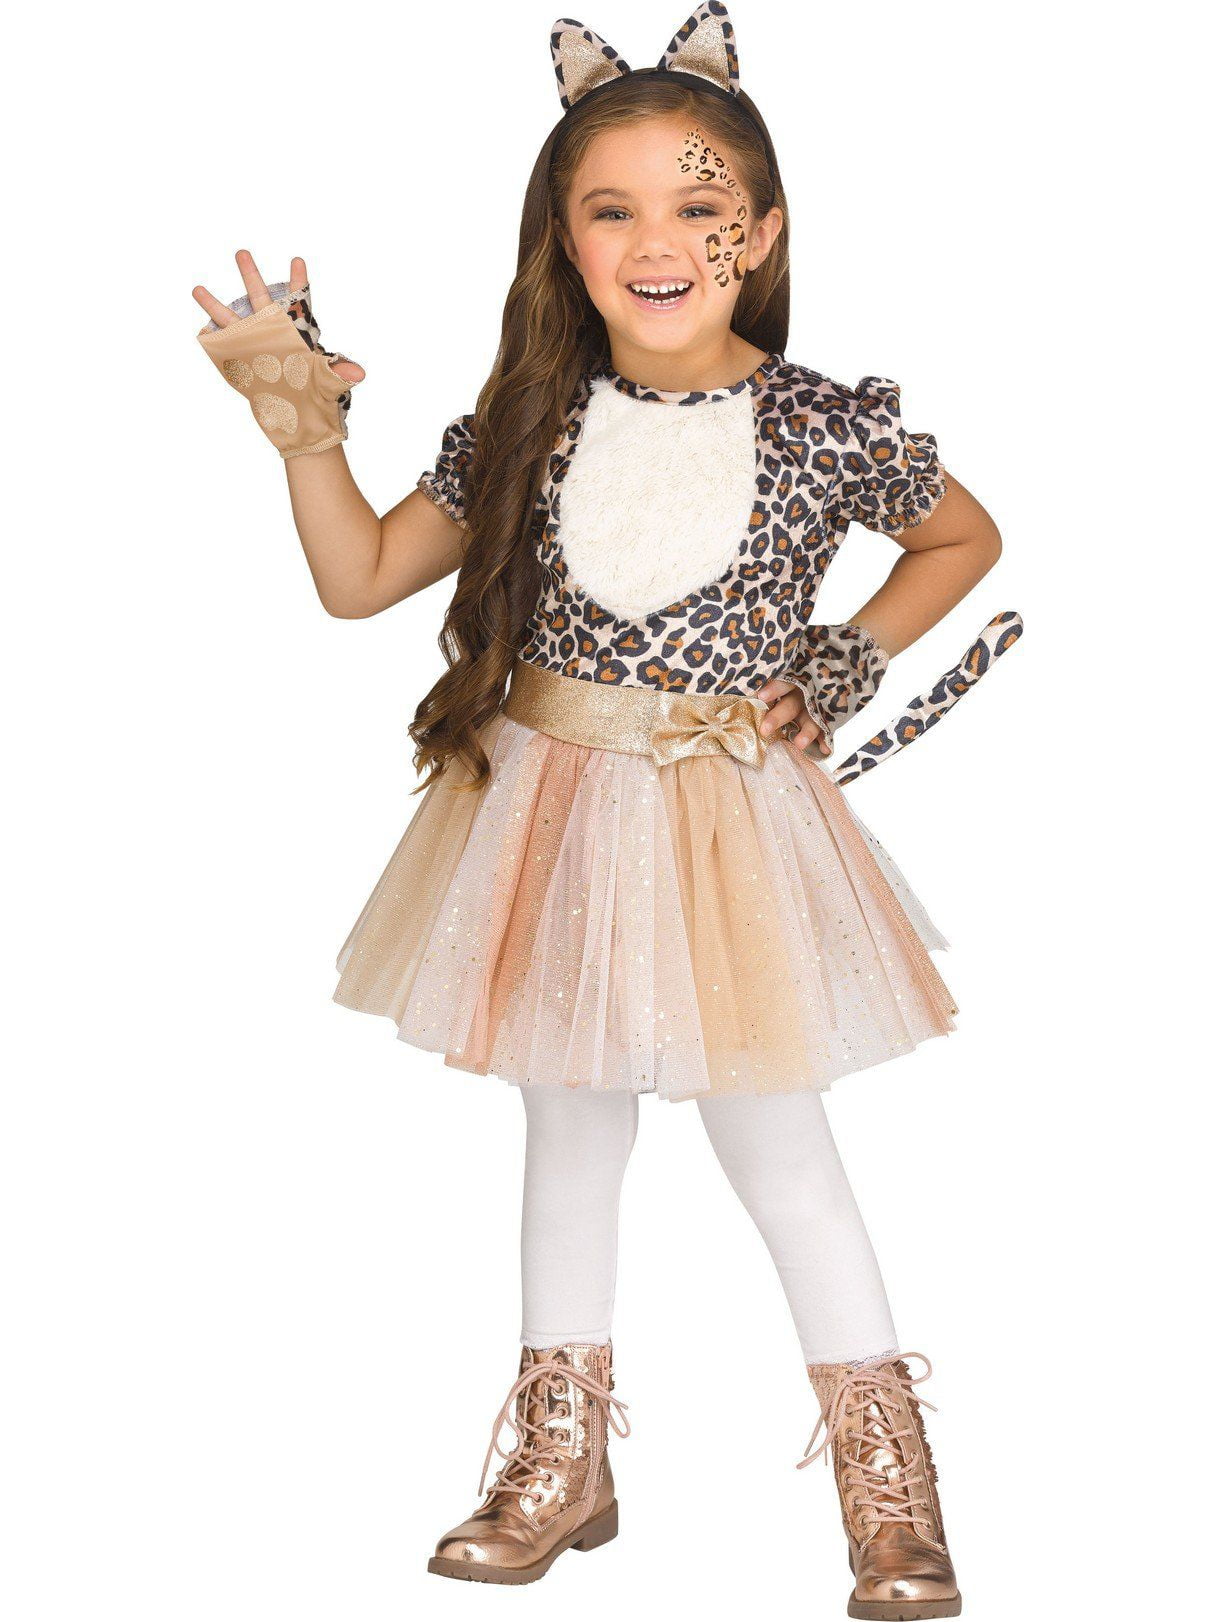 Toddler Girls Rose Gold Leopard Costume - Walmart.com - Walmart.com